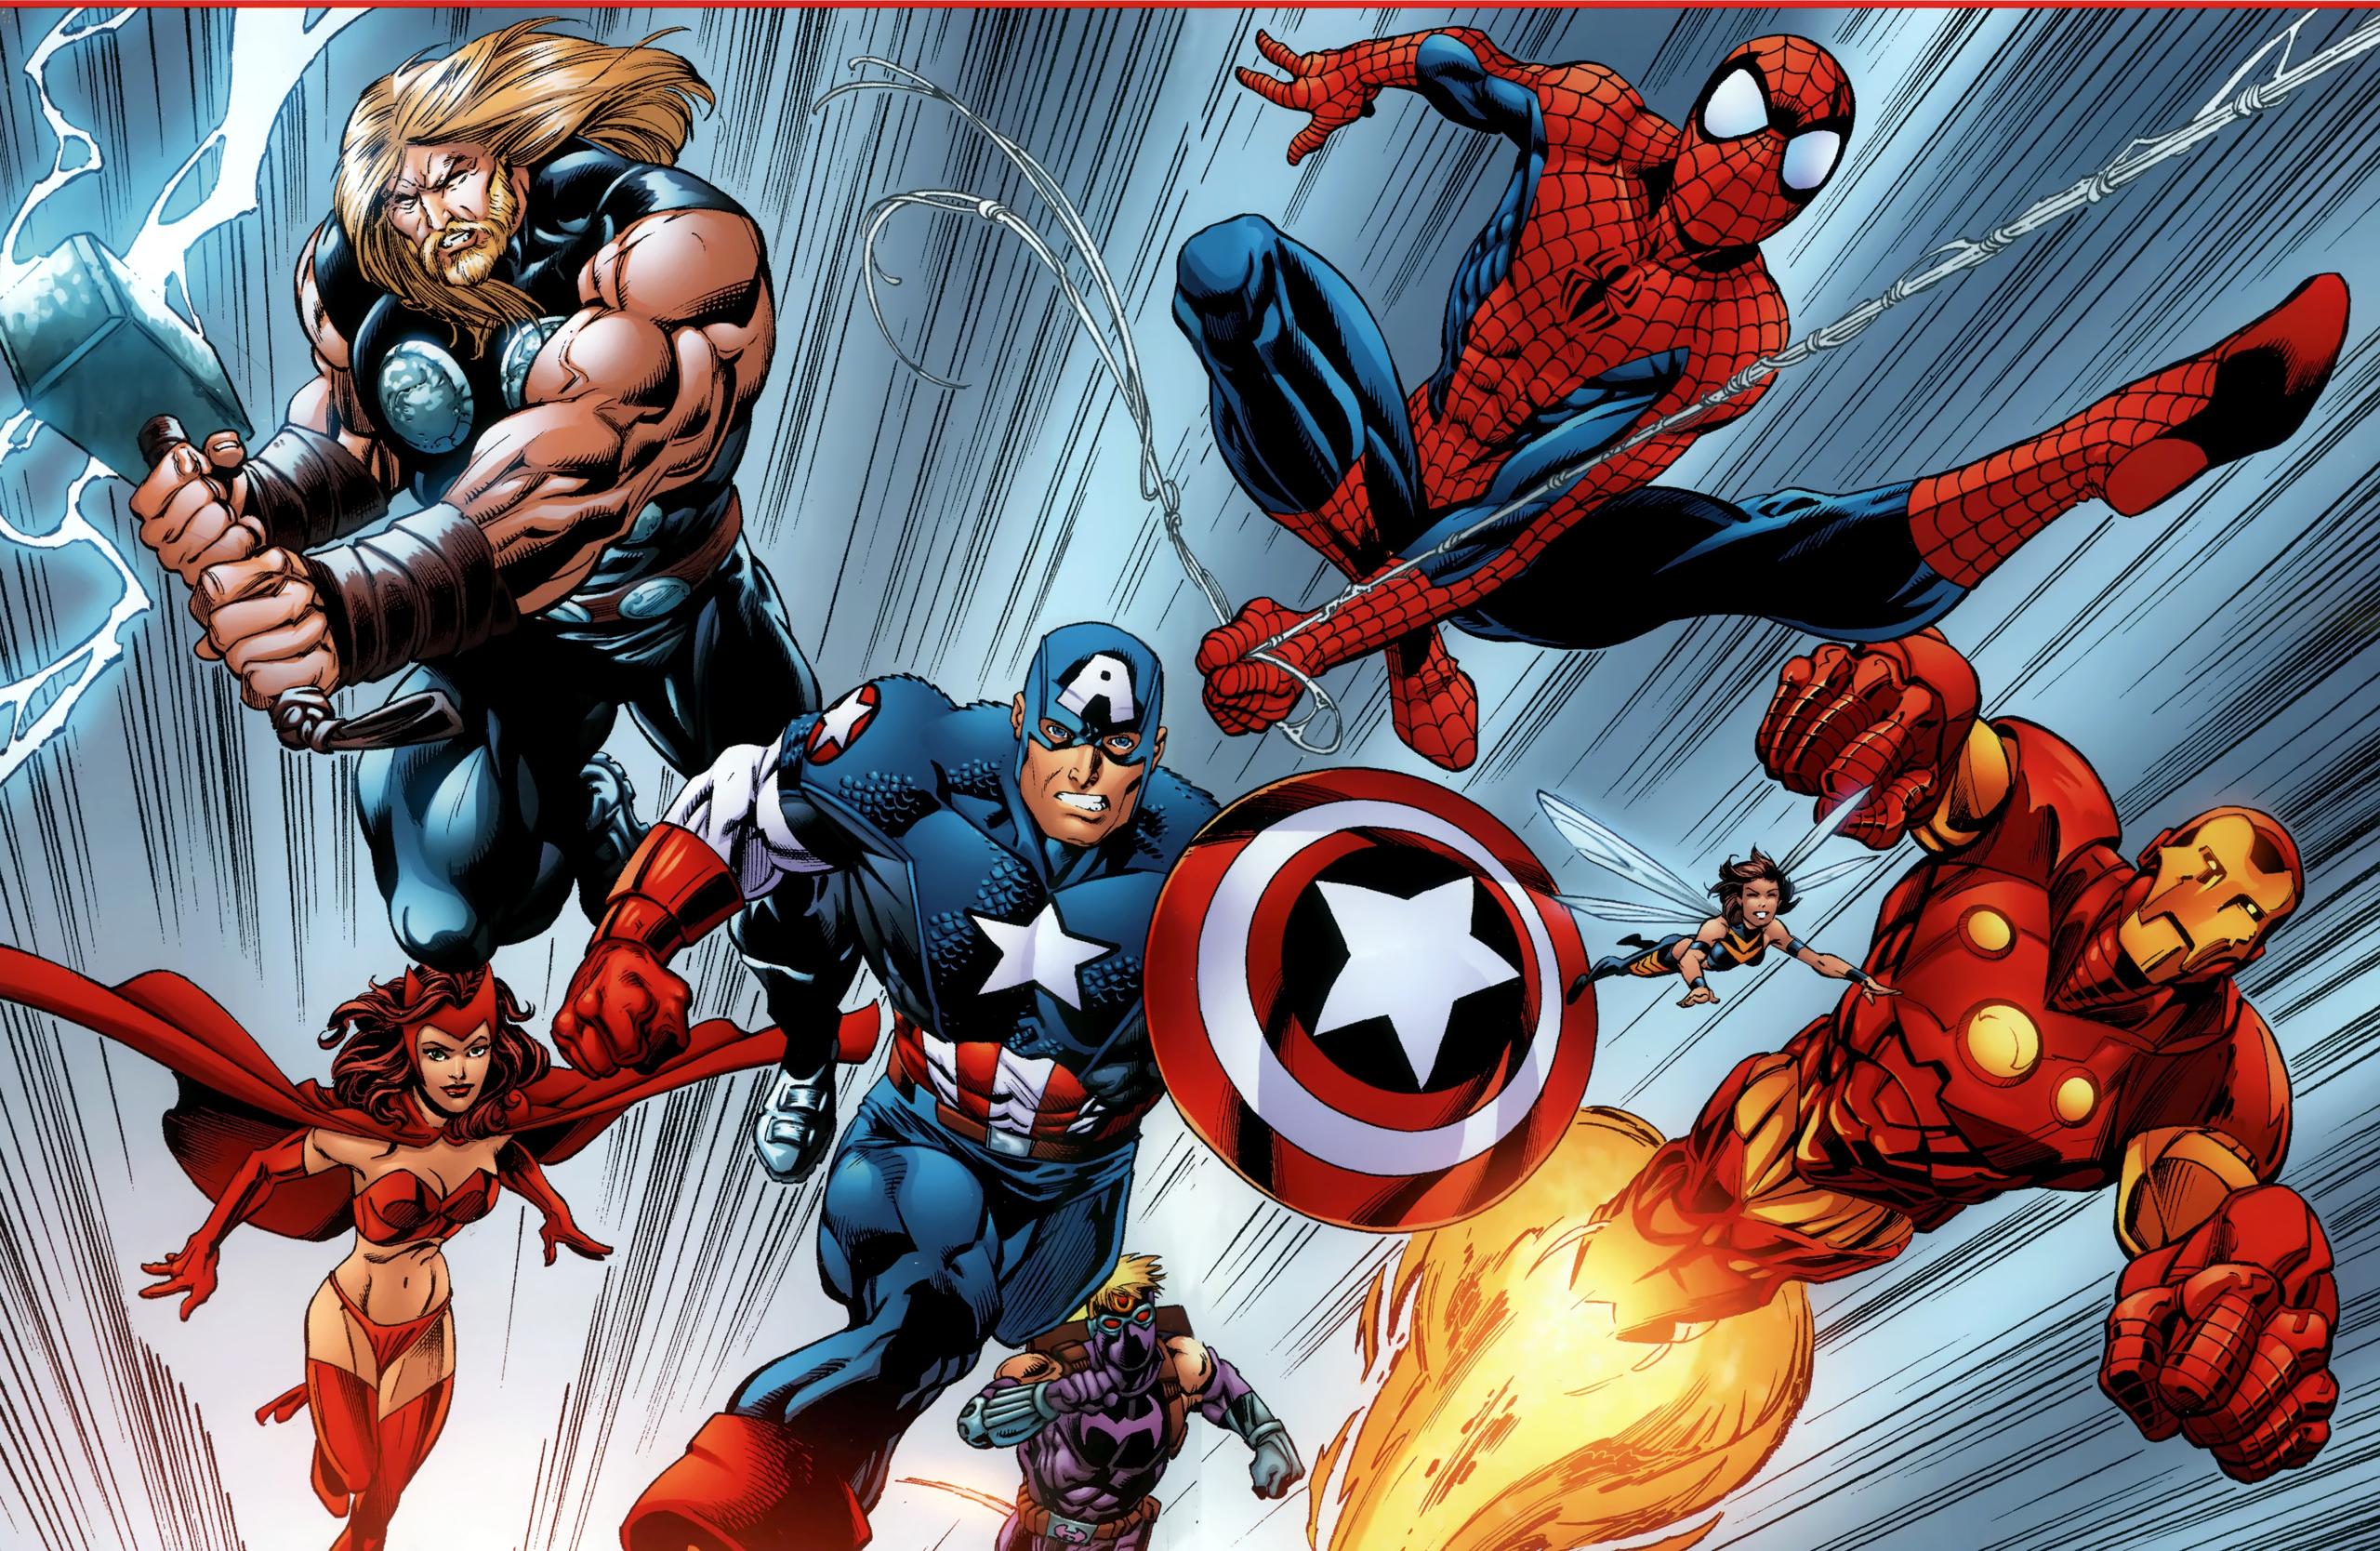 Ultimate Avengers Pics, Comics Collection